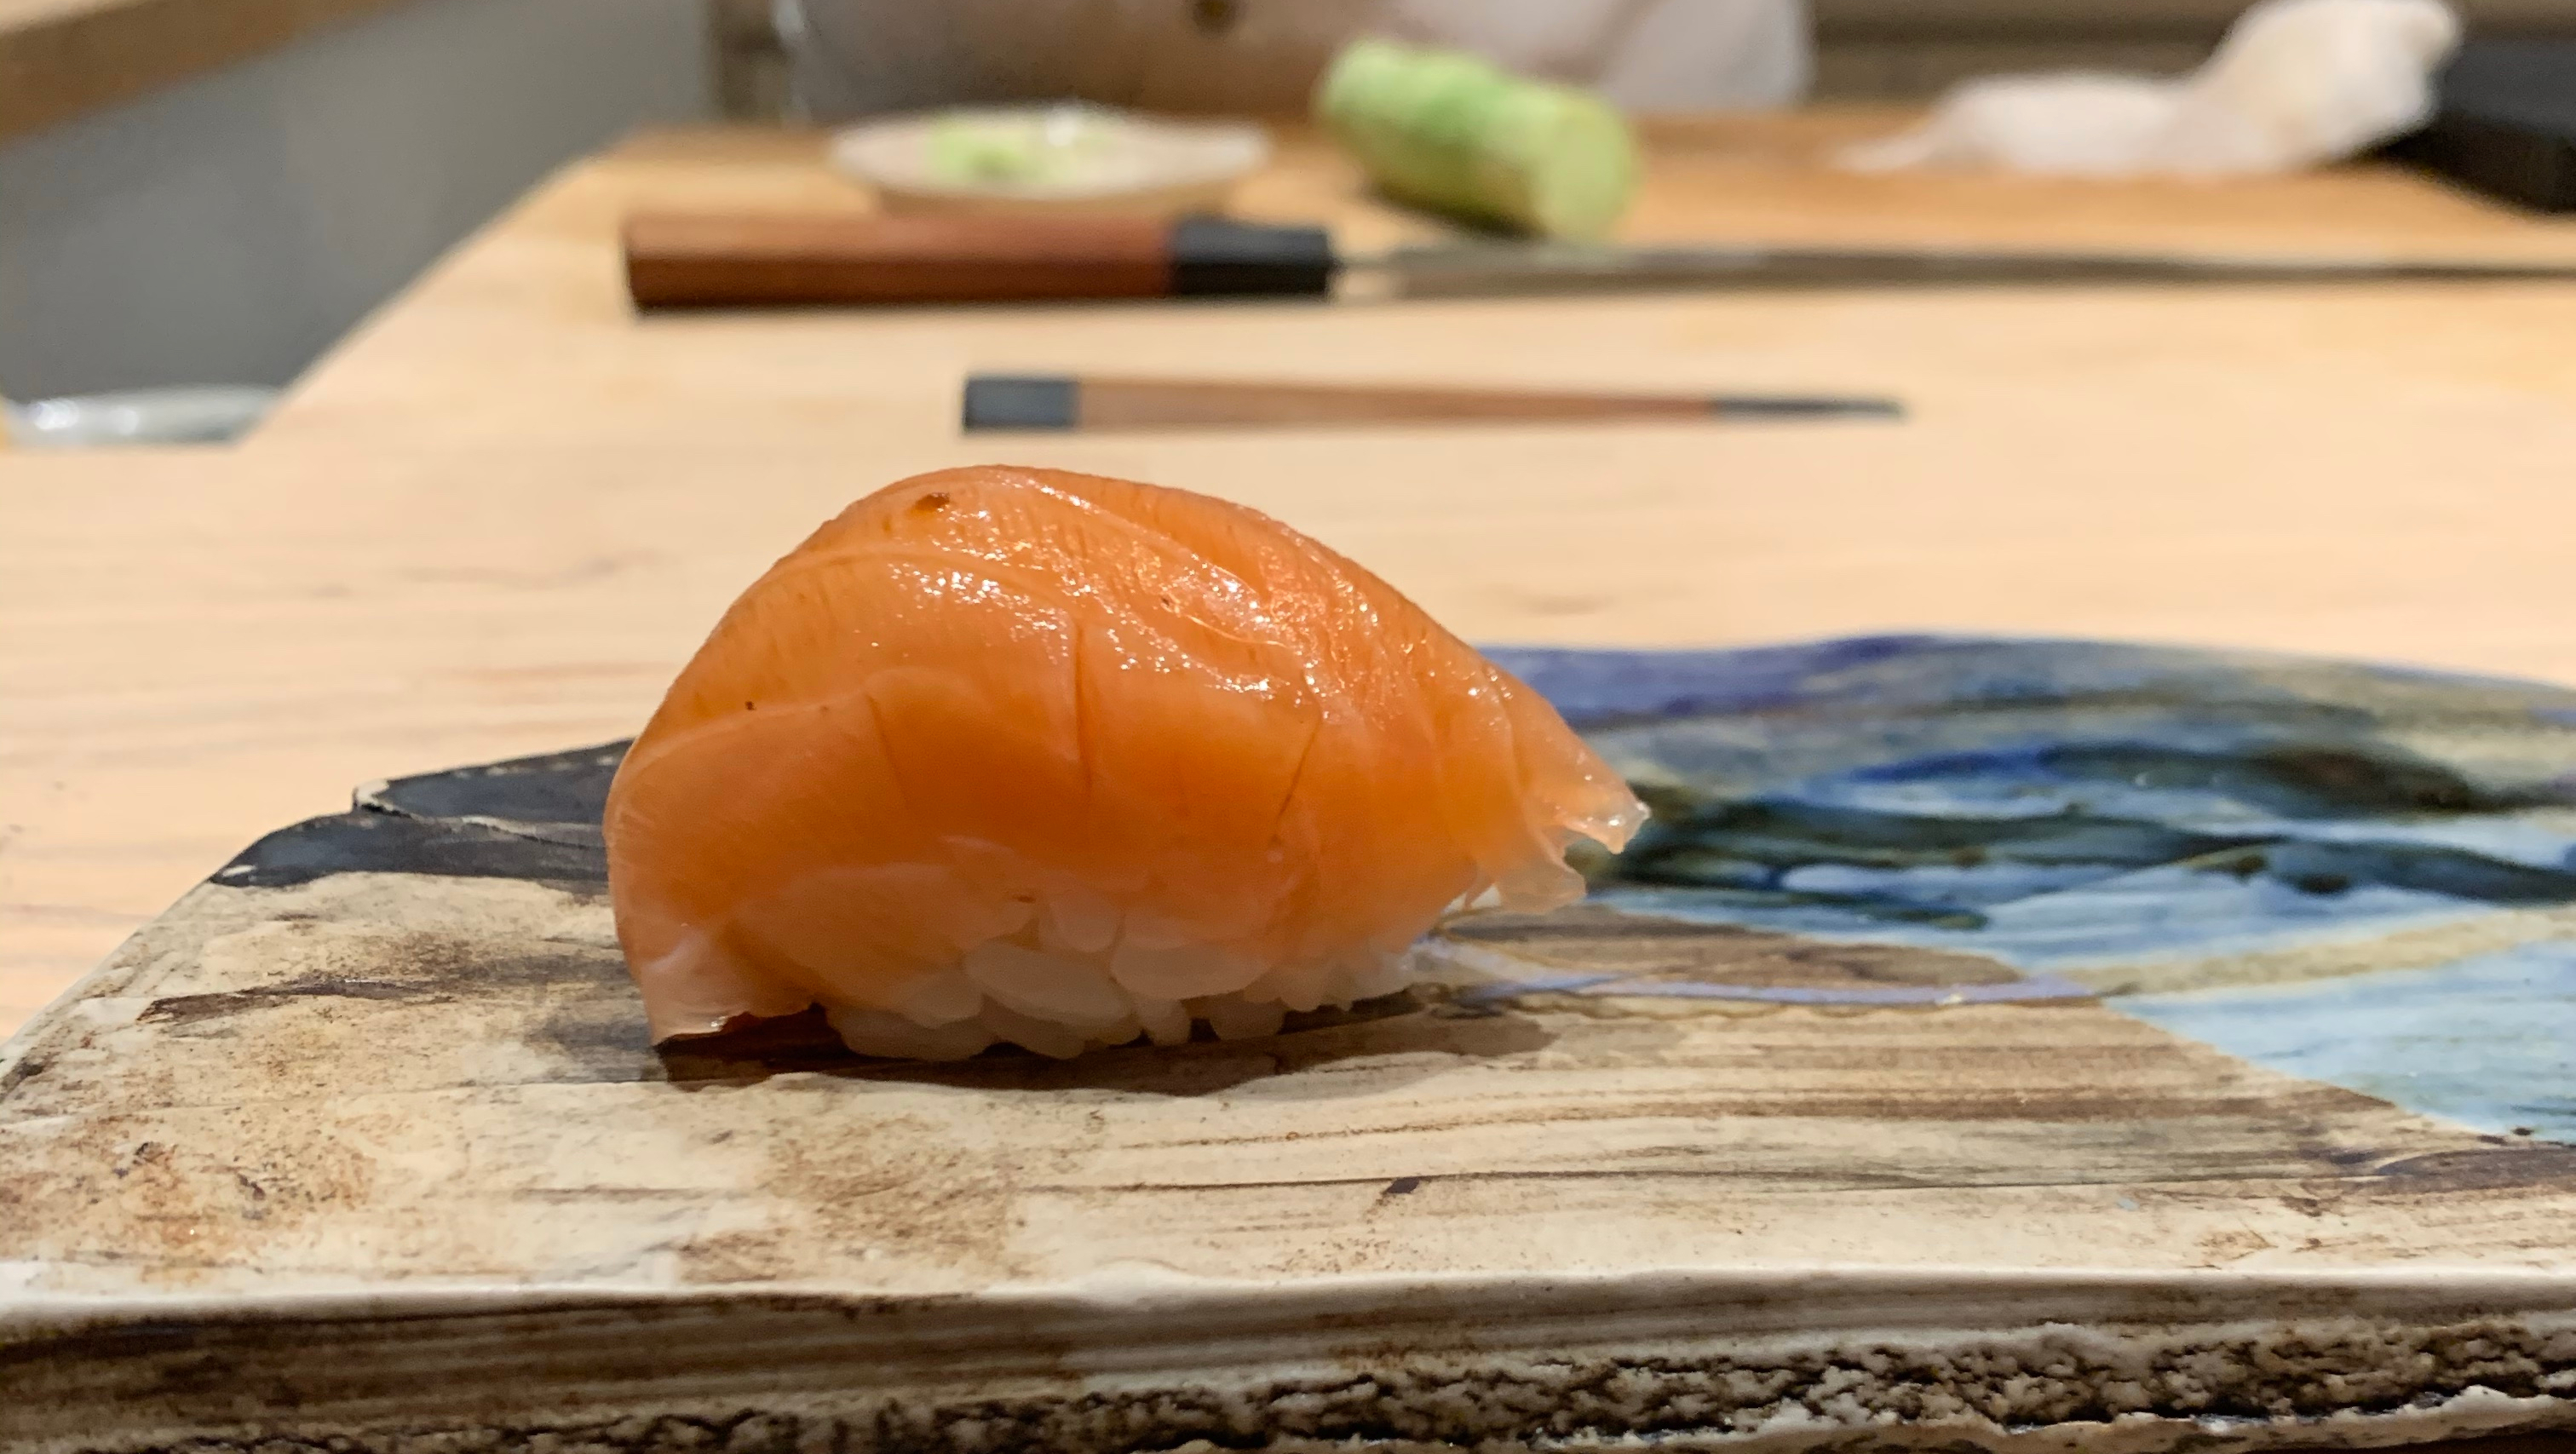 One piece of nigiri sushi, with an orange fish